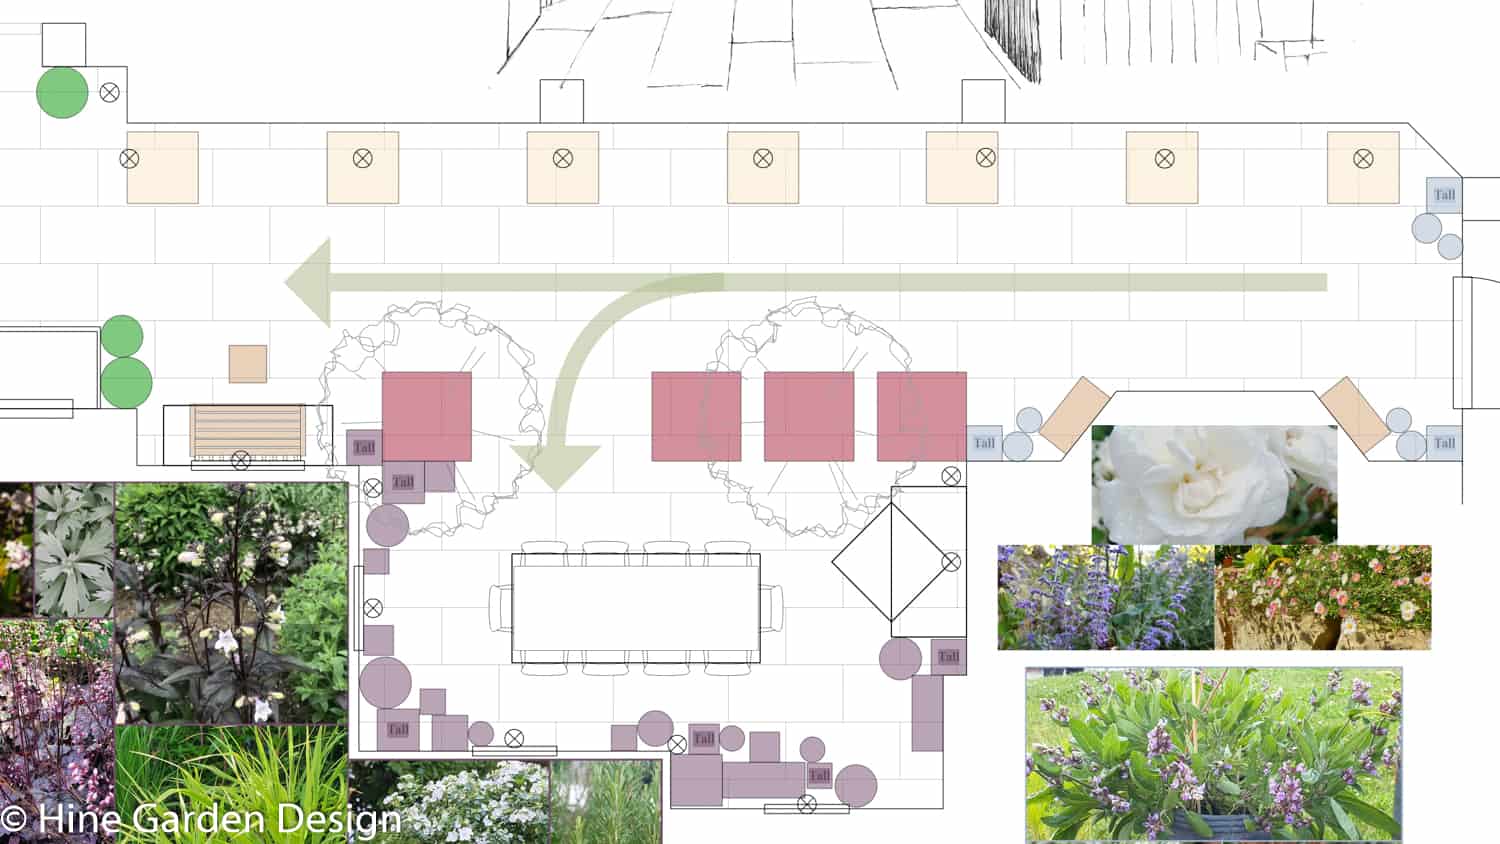 arrows showing the journey through Garden Design plan